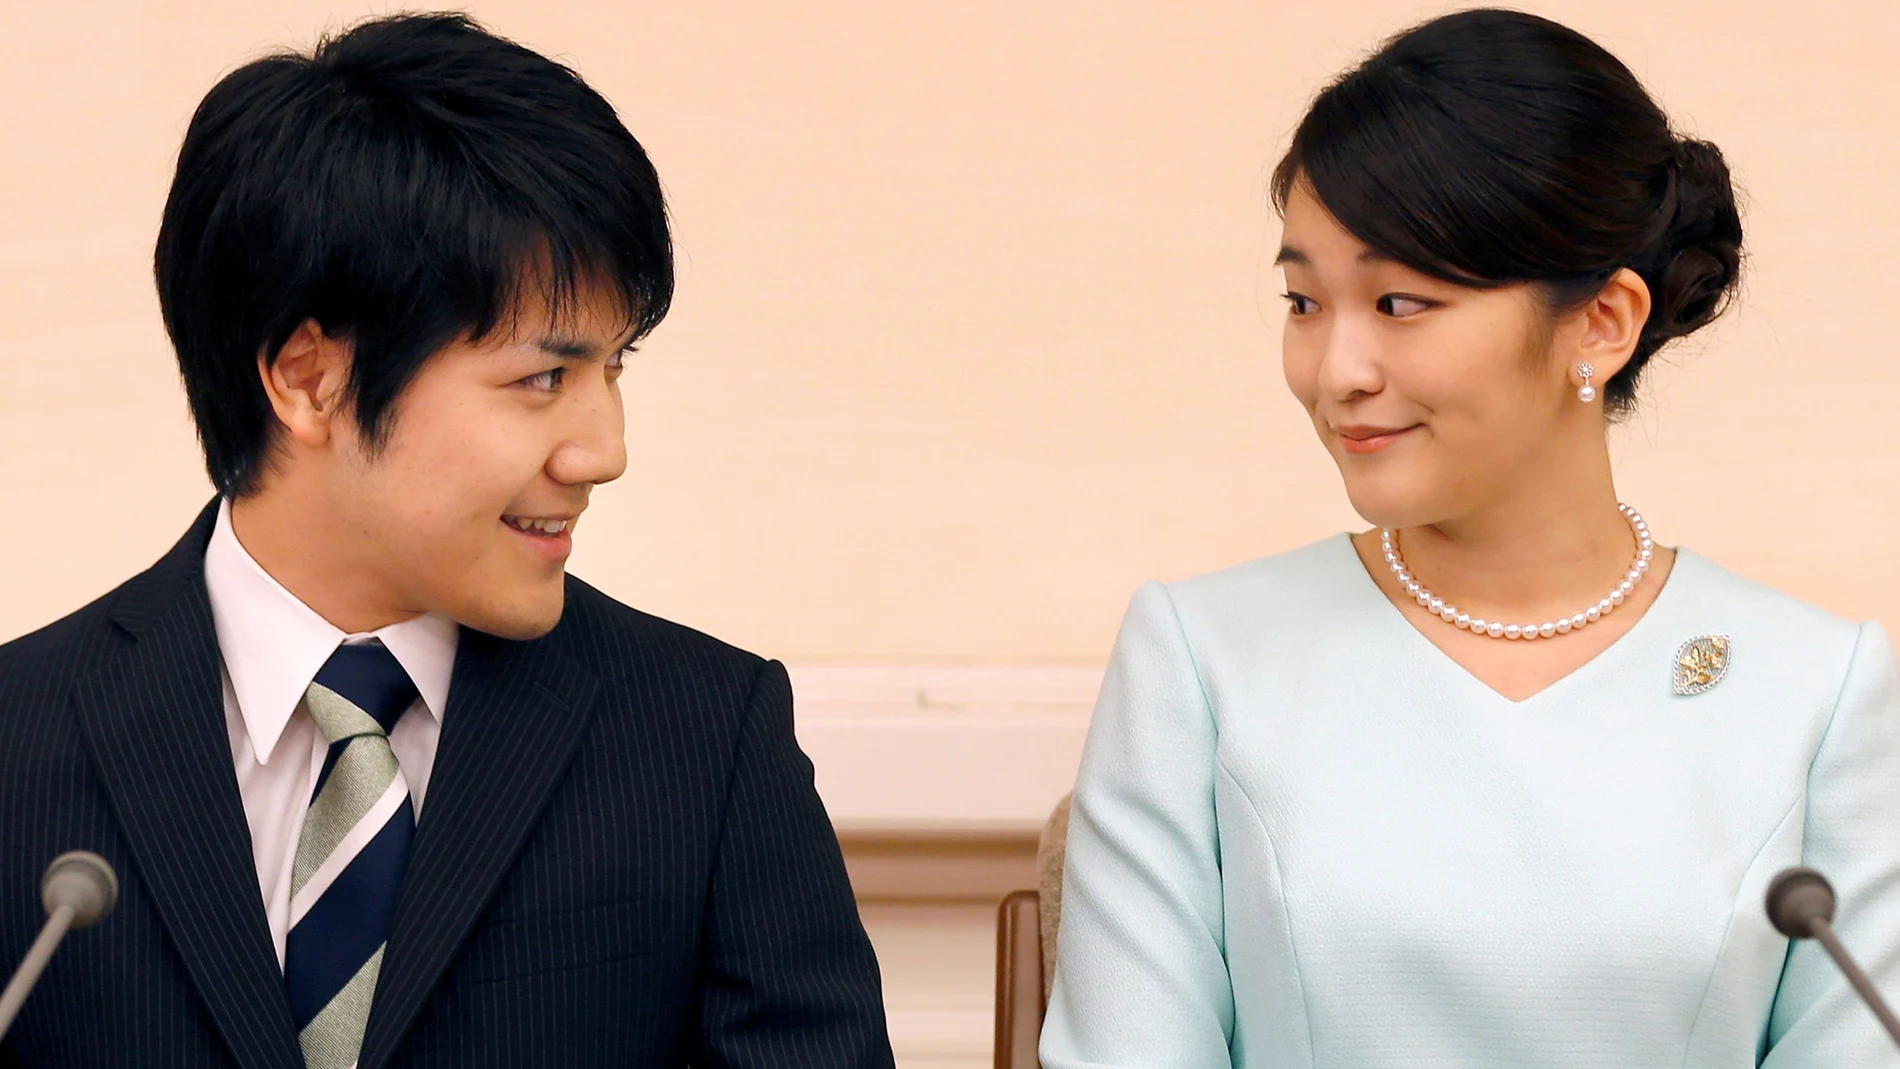 La princesa Mako y Kei Komuro, el dia de su boda